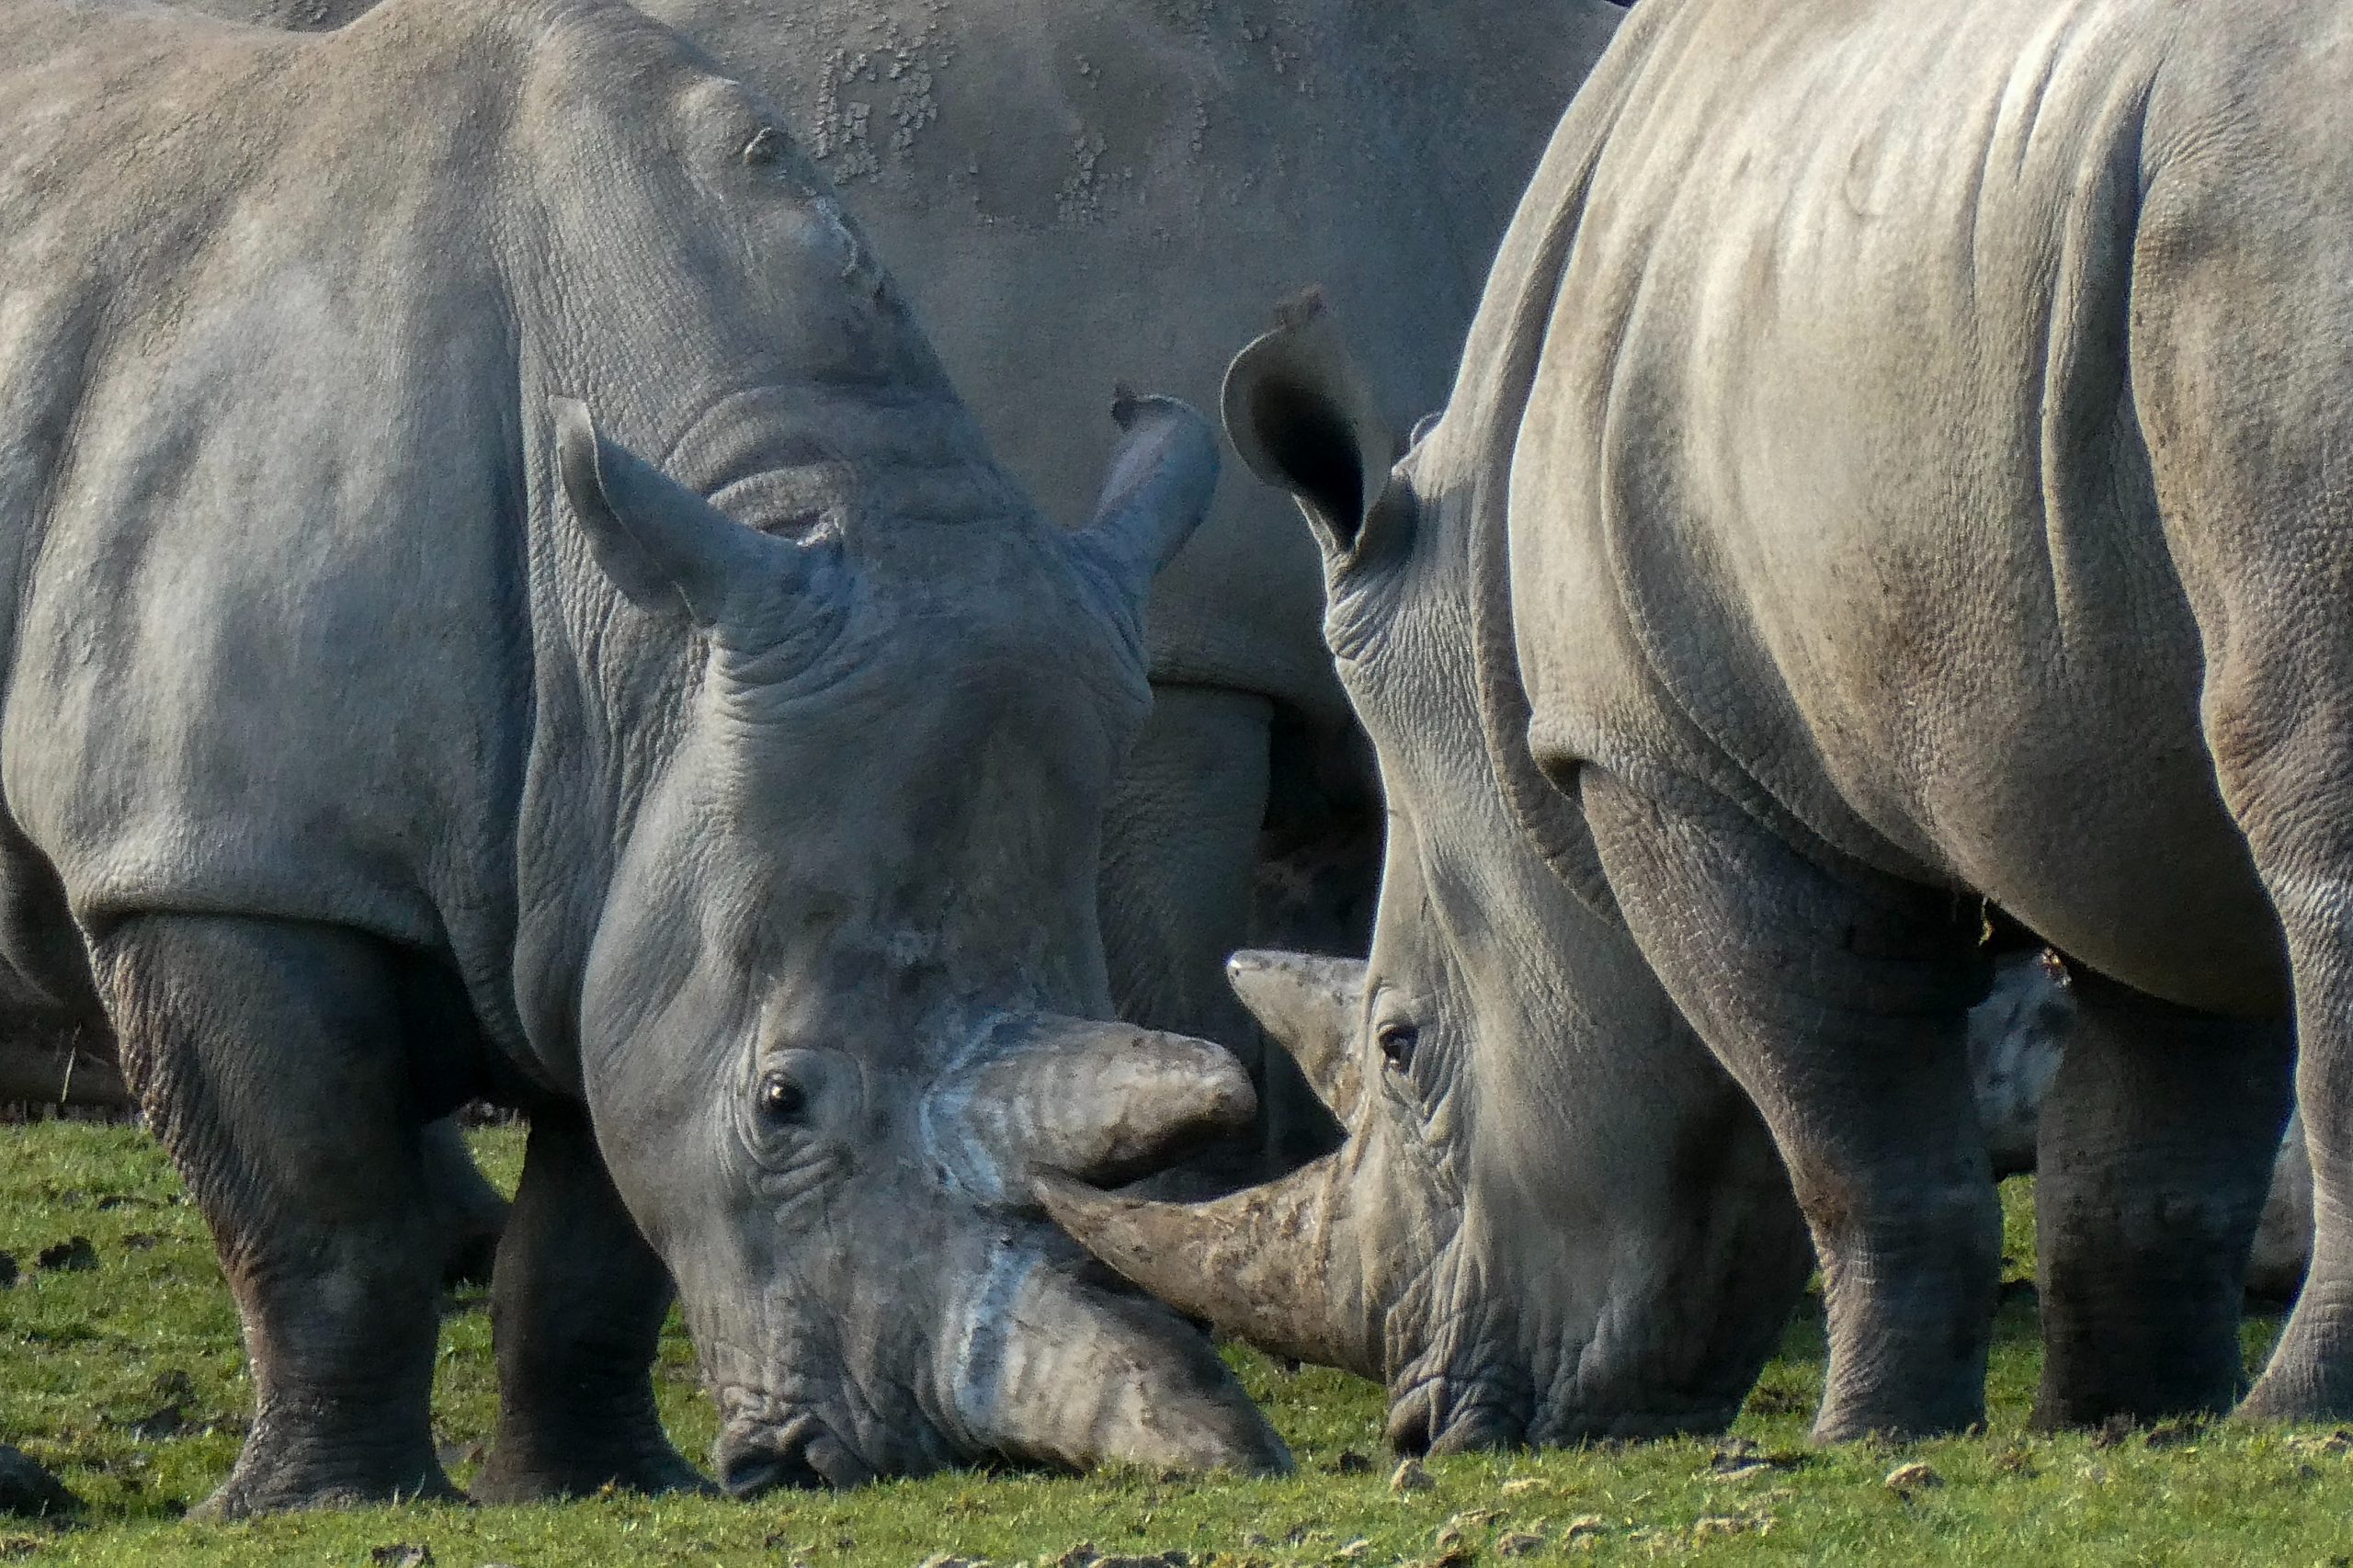 Rhinos at Ziwa- Murchison Falls National Park safari